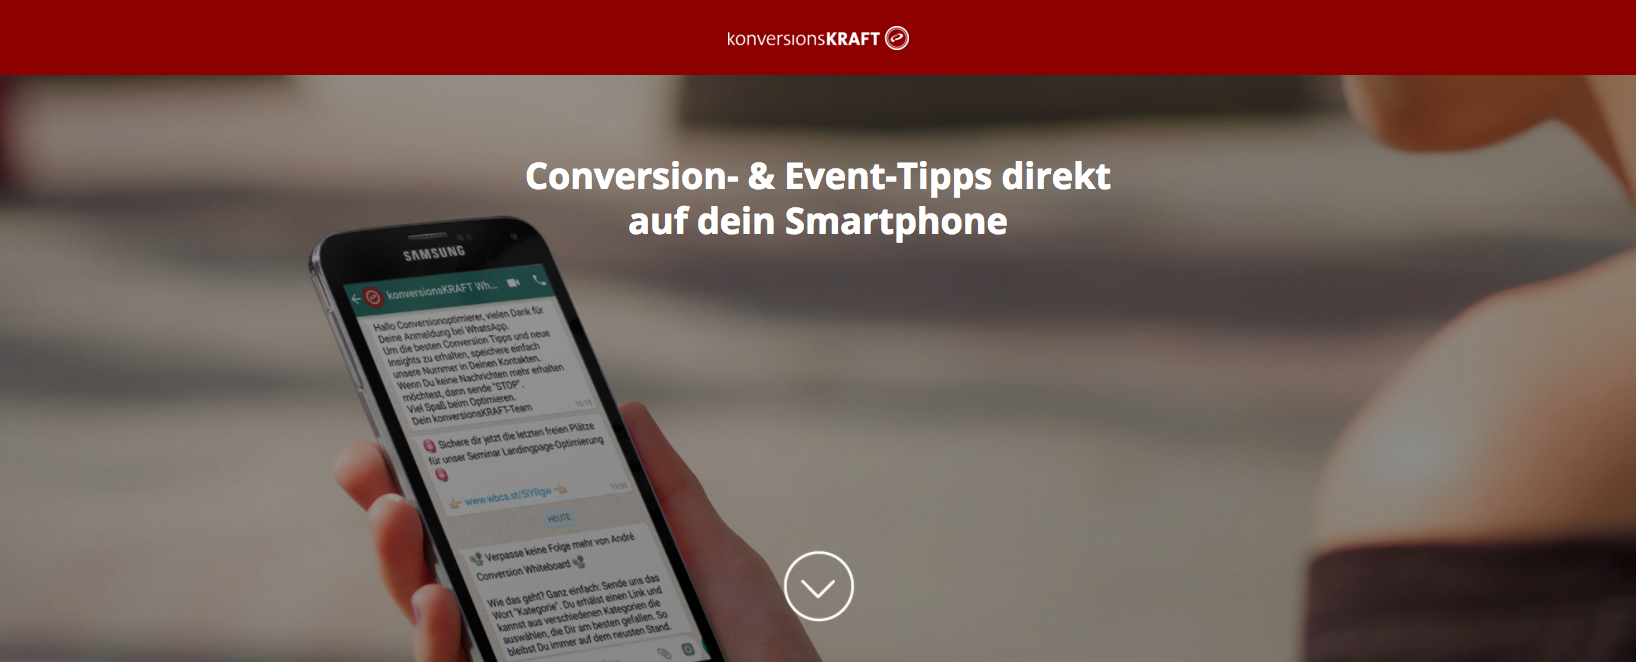 konversionsKRAFT messenger conversion newsletter